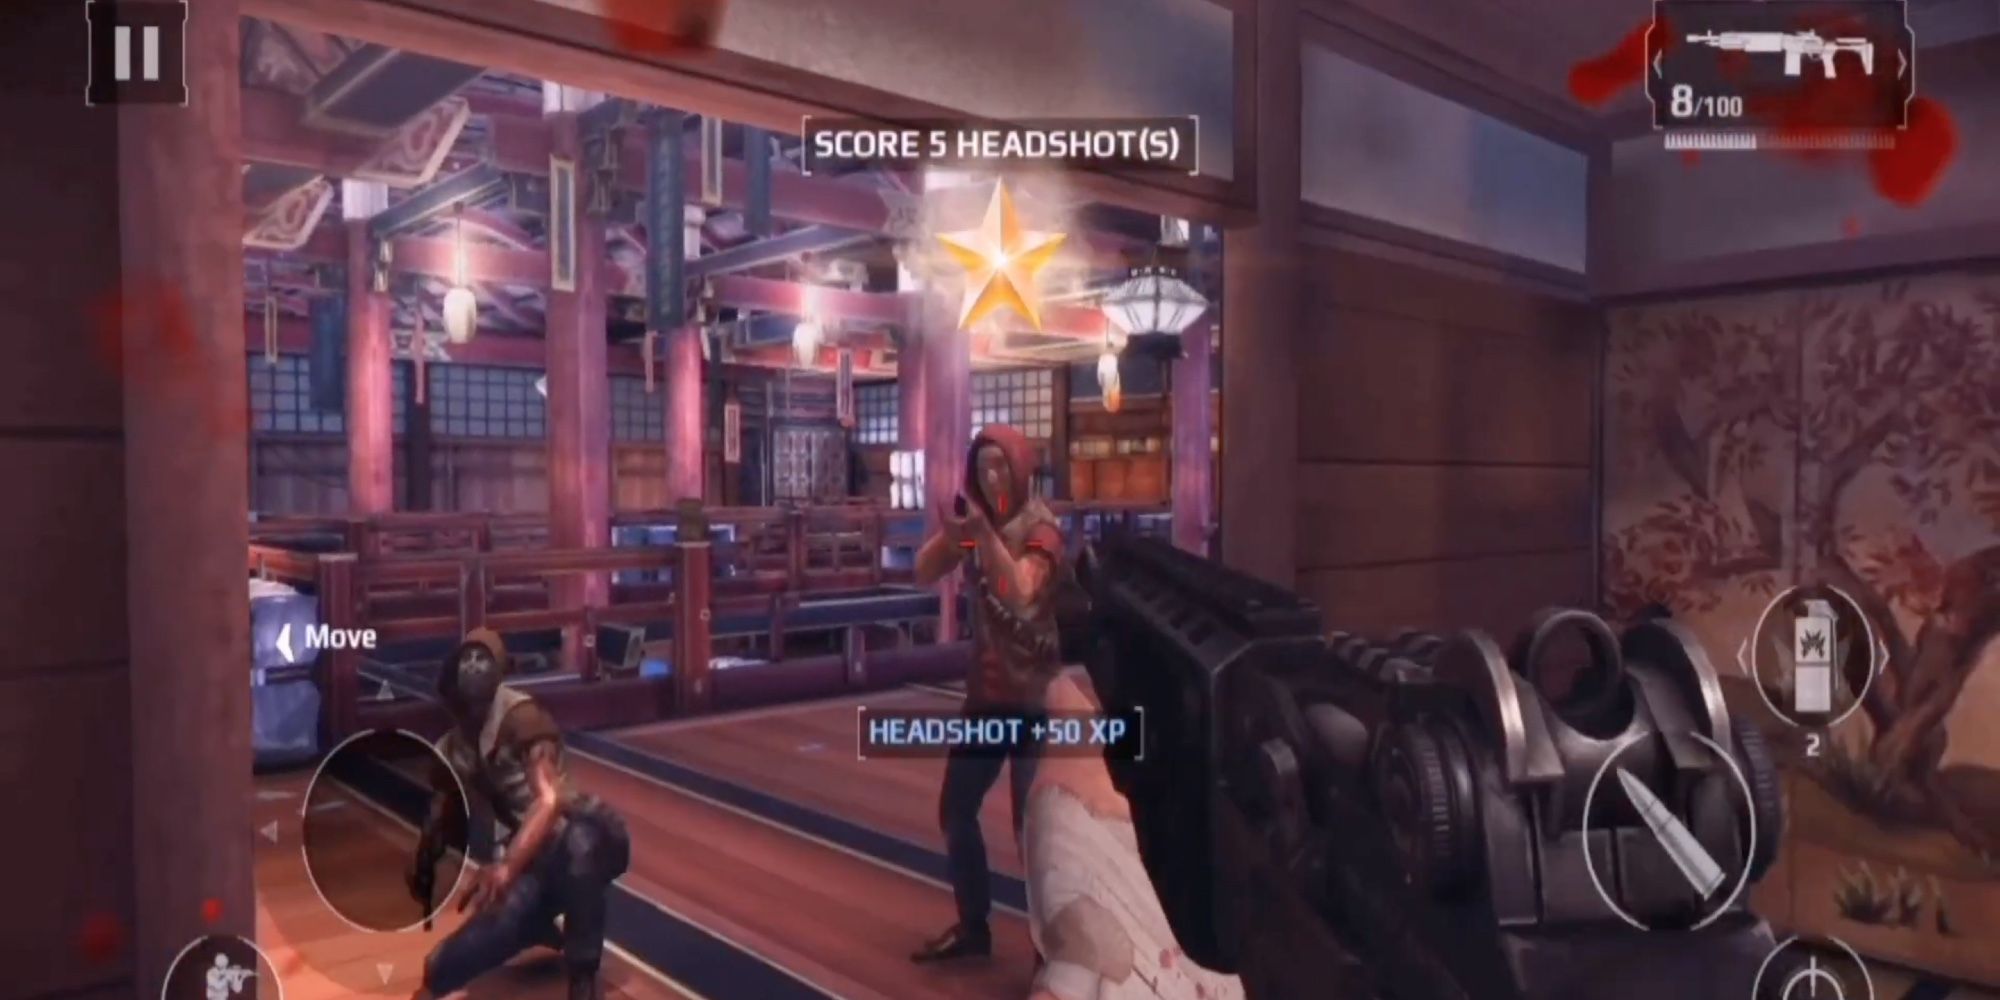 FPS Games on Mobile - Modern Combat 5 - Player lands headshot on enemy